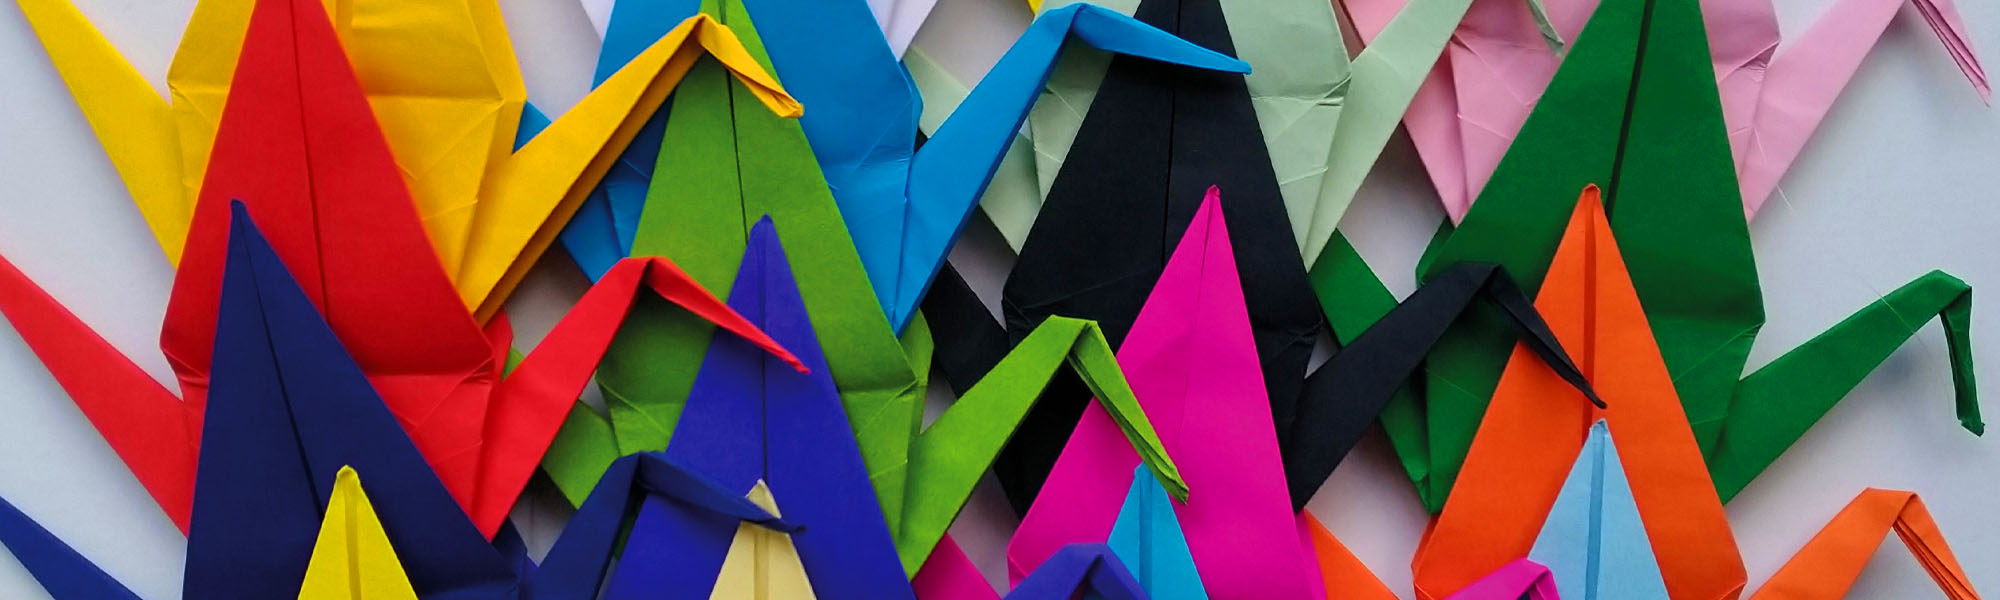 Colourful paper cranes